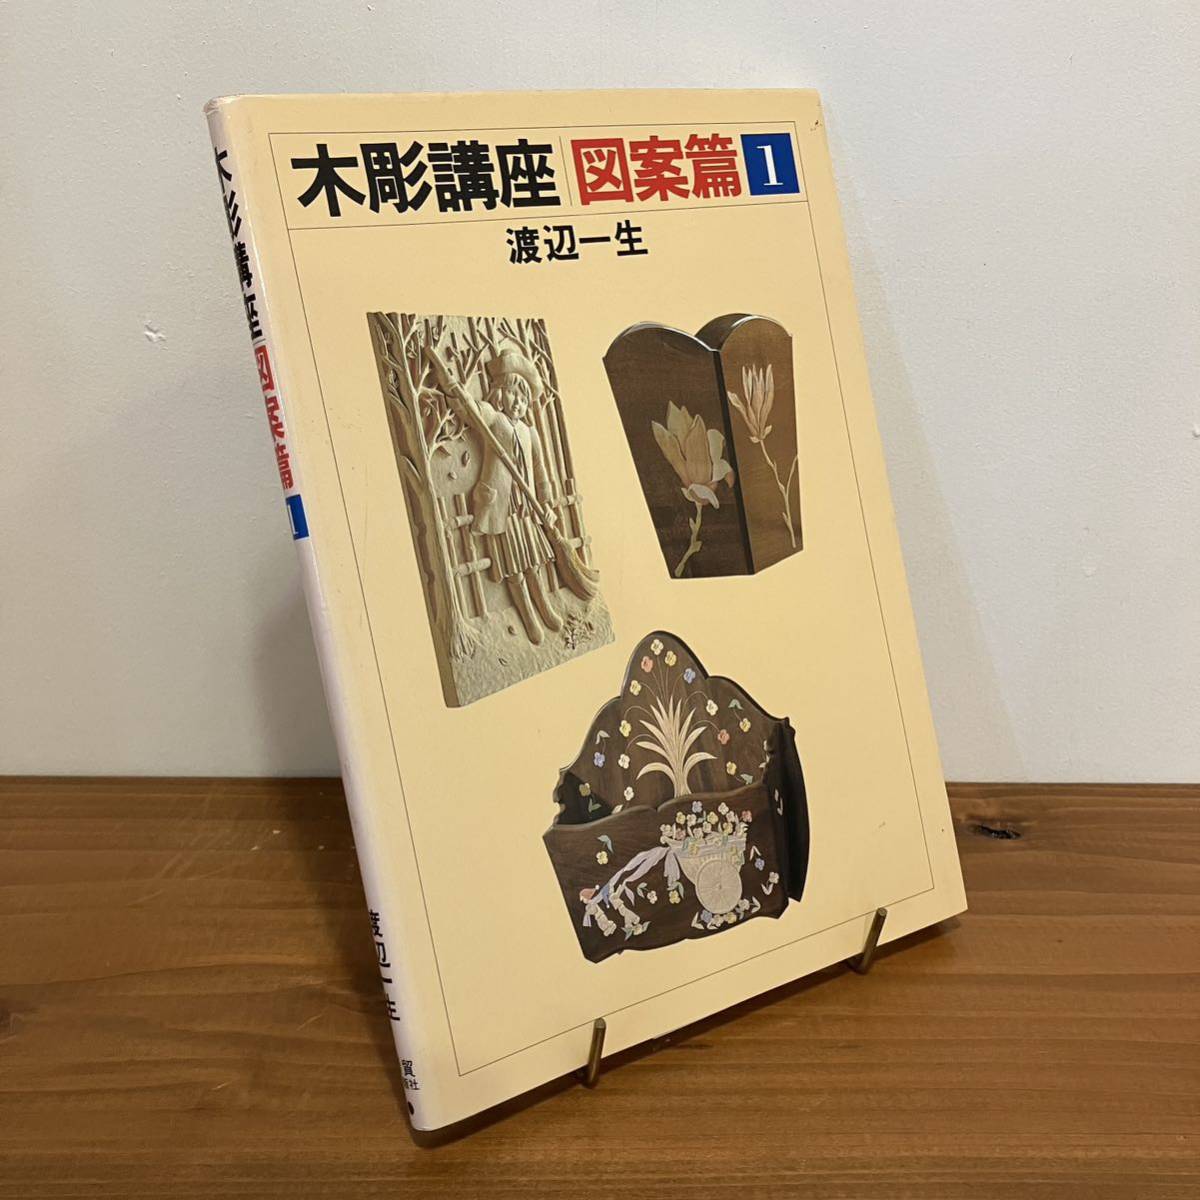 231217 "Деревянный курс скульптуры Devision 1" Watanabe Ichi Nikkai Trading Co., Ltd. 1994 9th Print